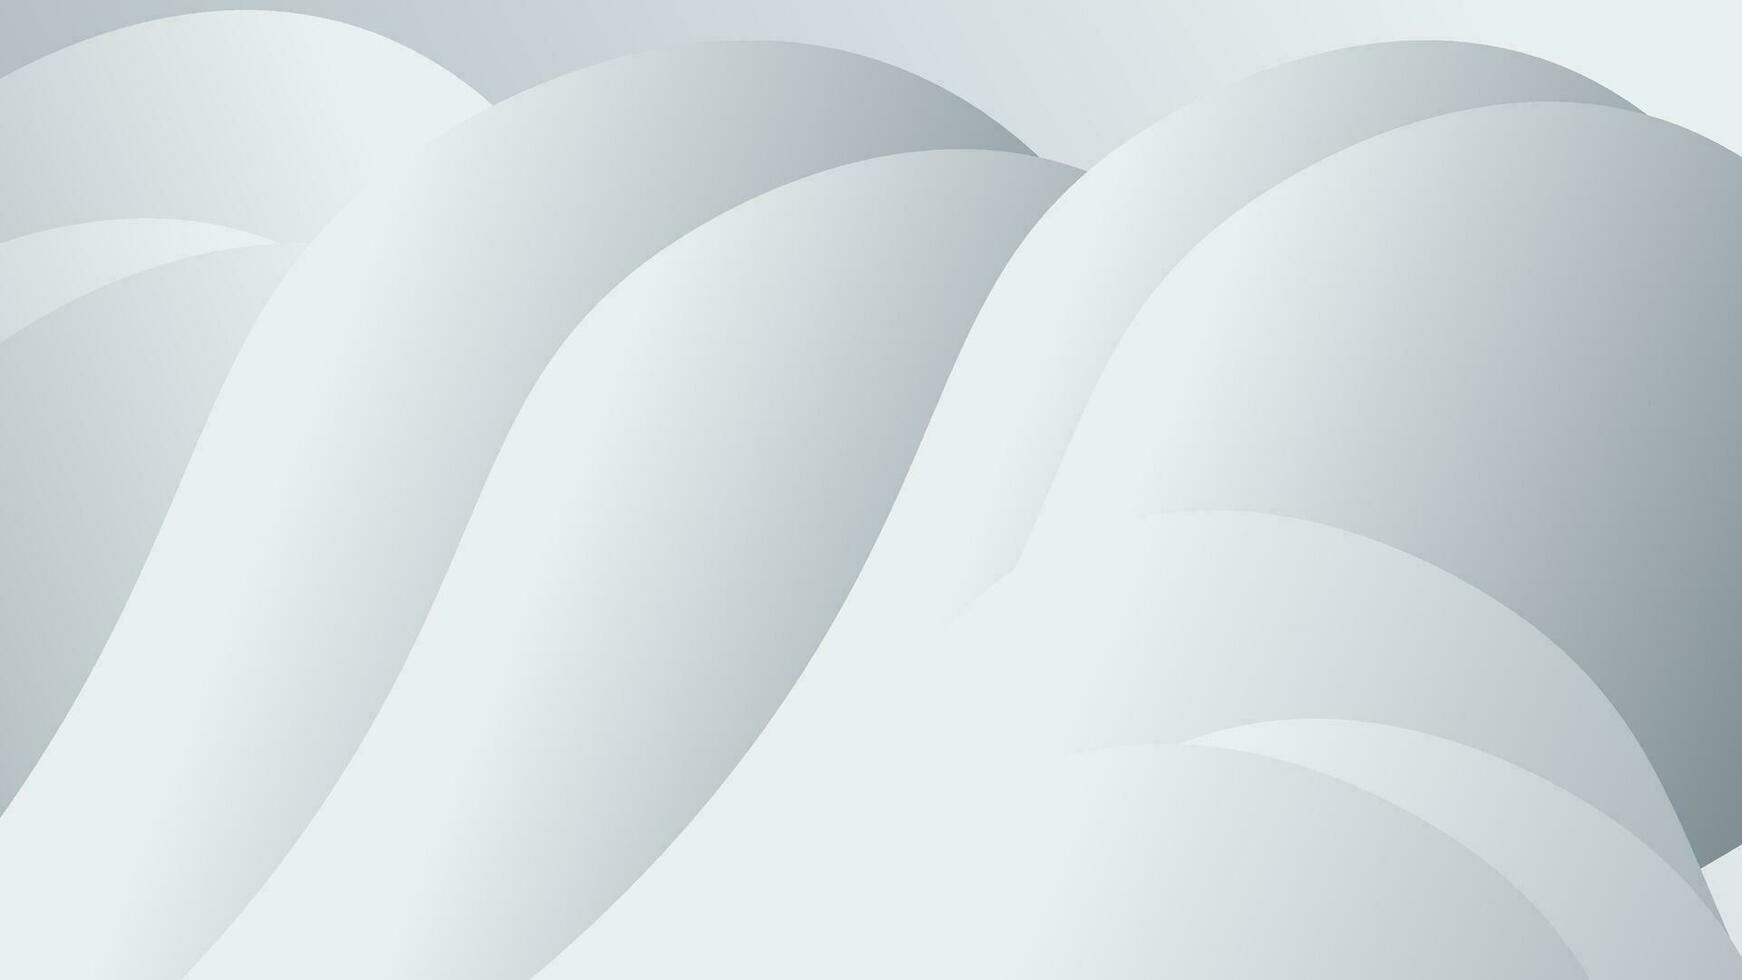 Wavy white gradation white background. Vector illustration of background